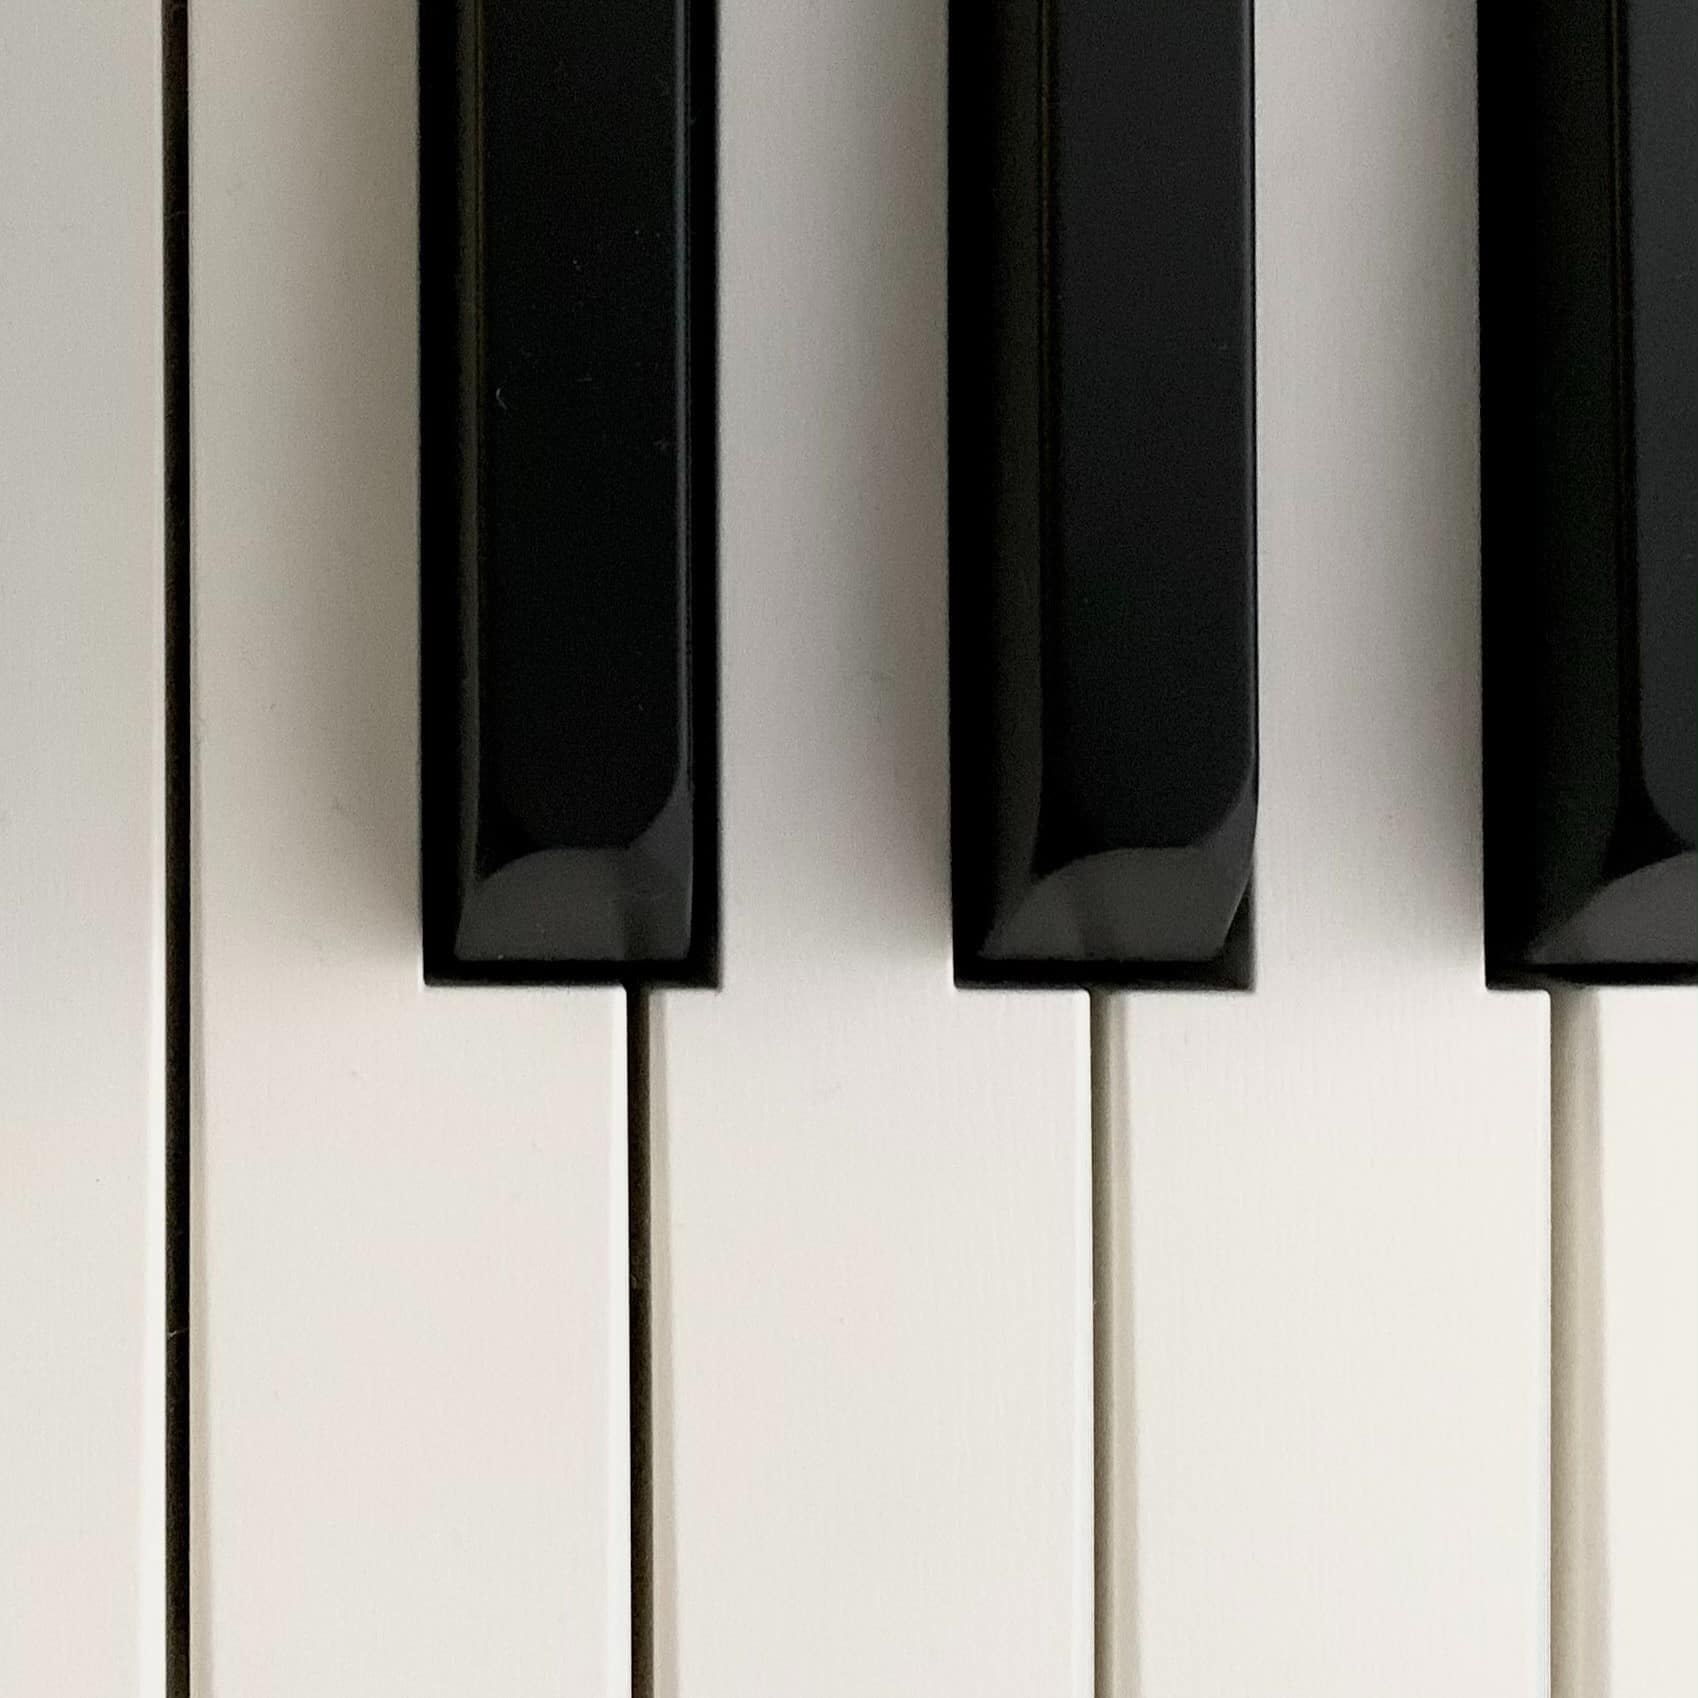 Birds-eye view of piano keys